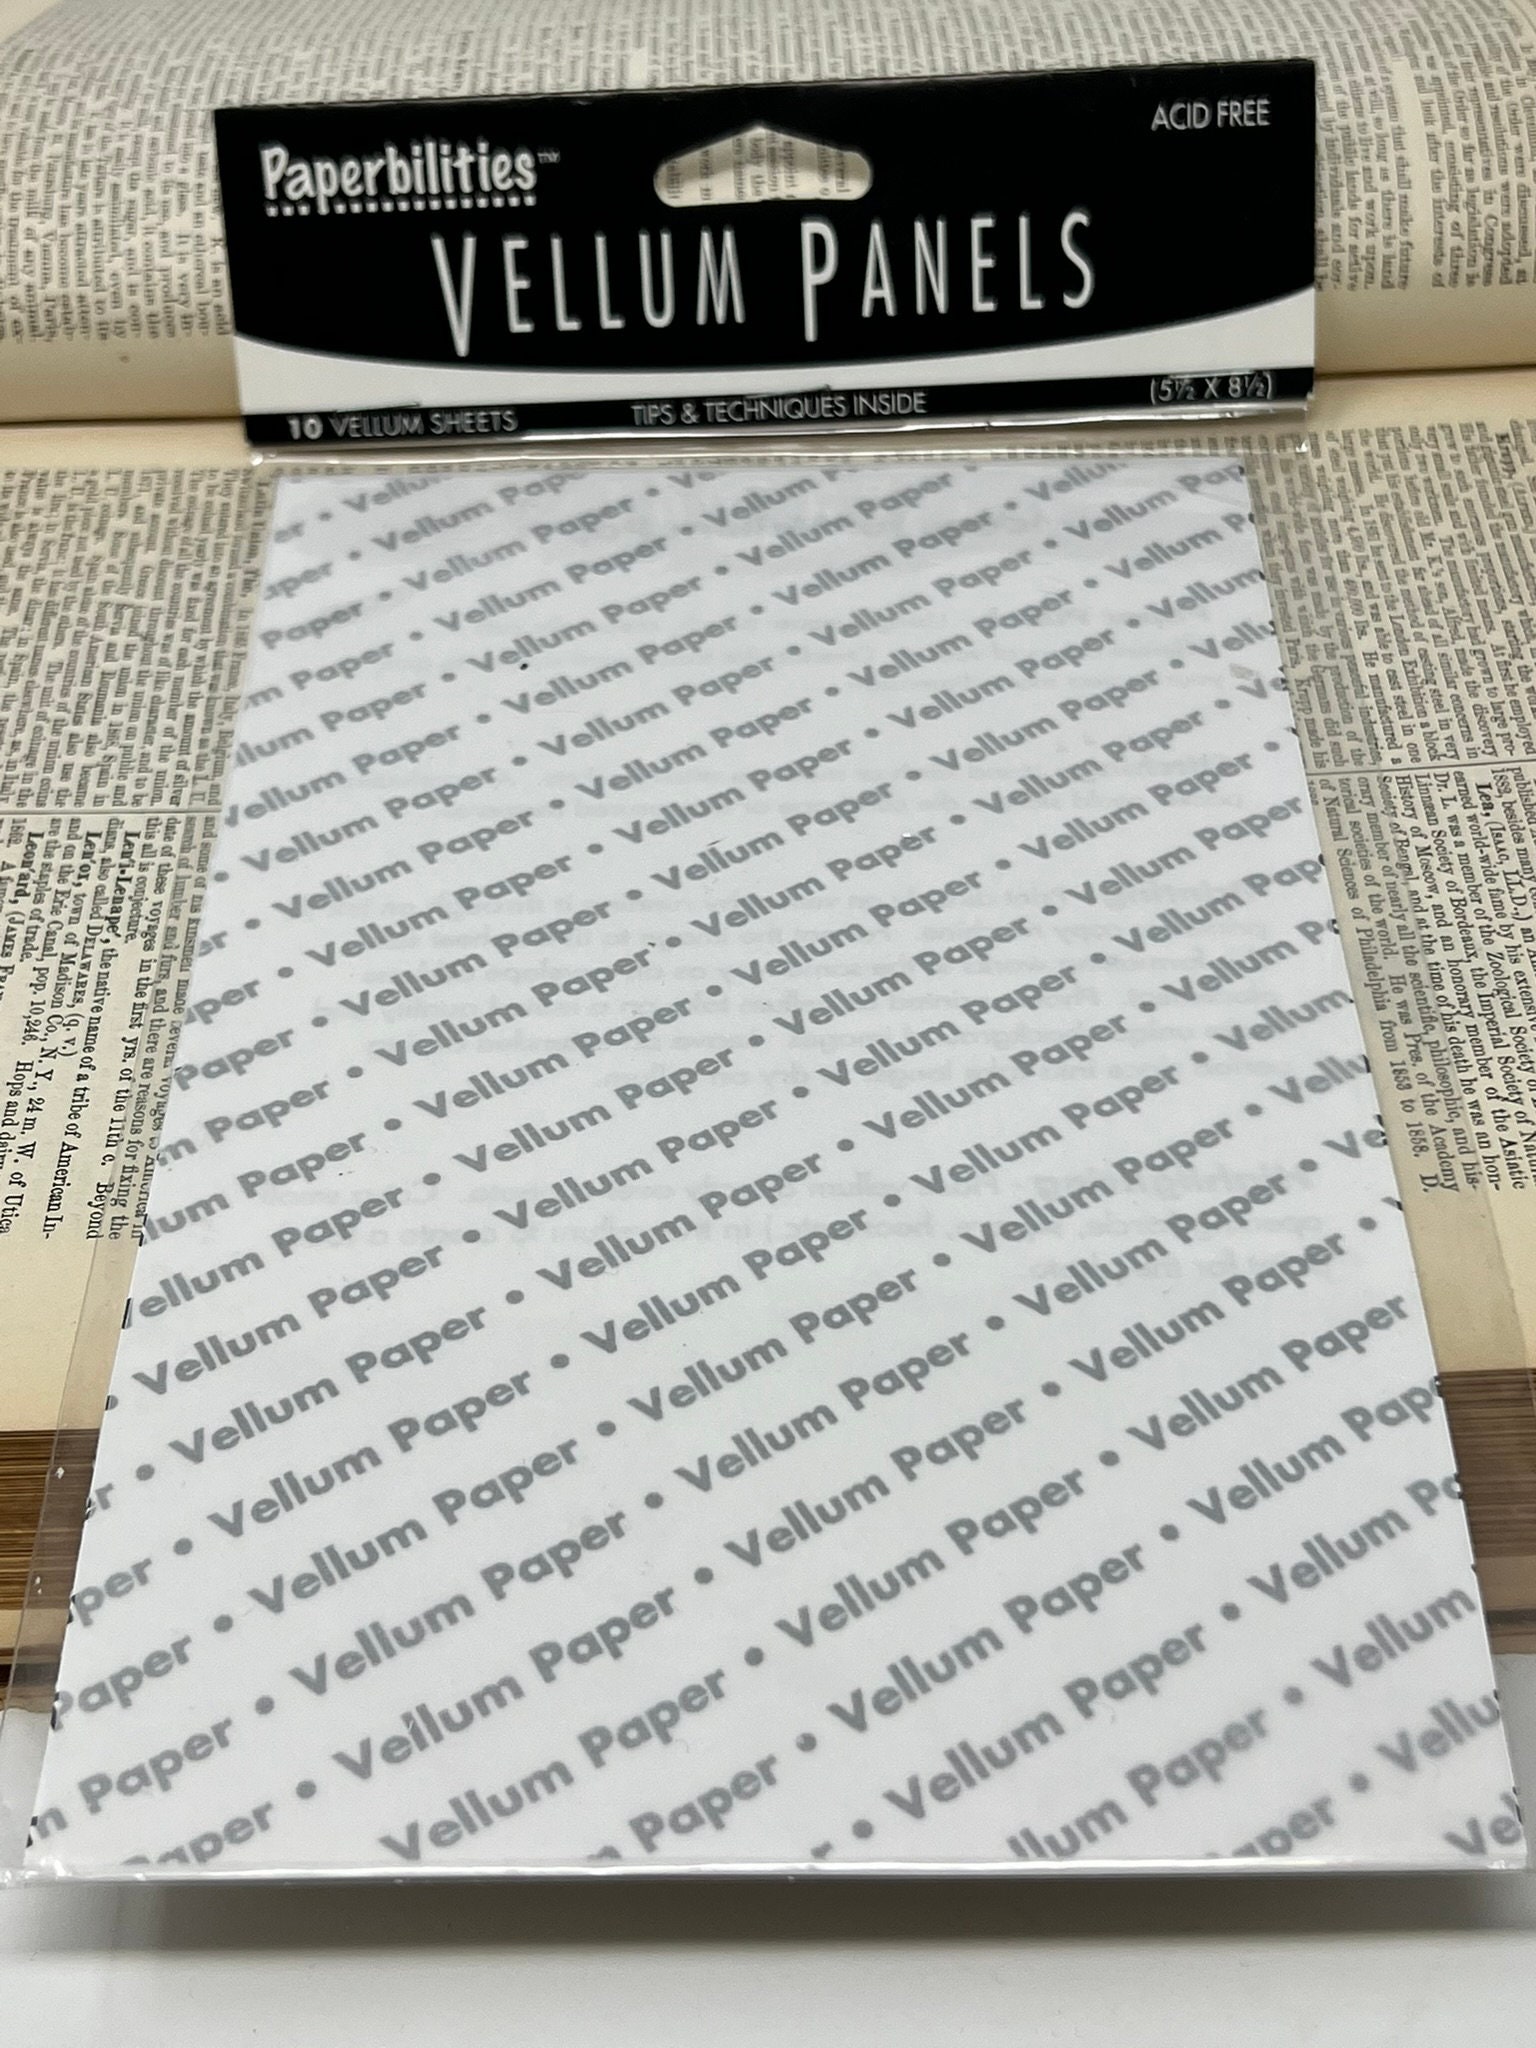 Paperbilities Acid Free Vellum Panels 10 Vellum Sheets 5.5 X 8.5